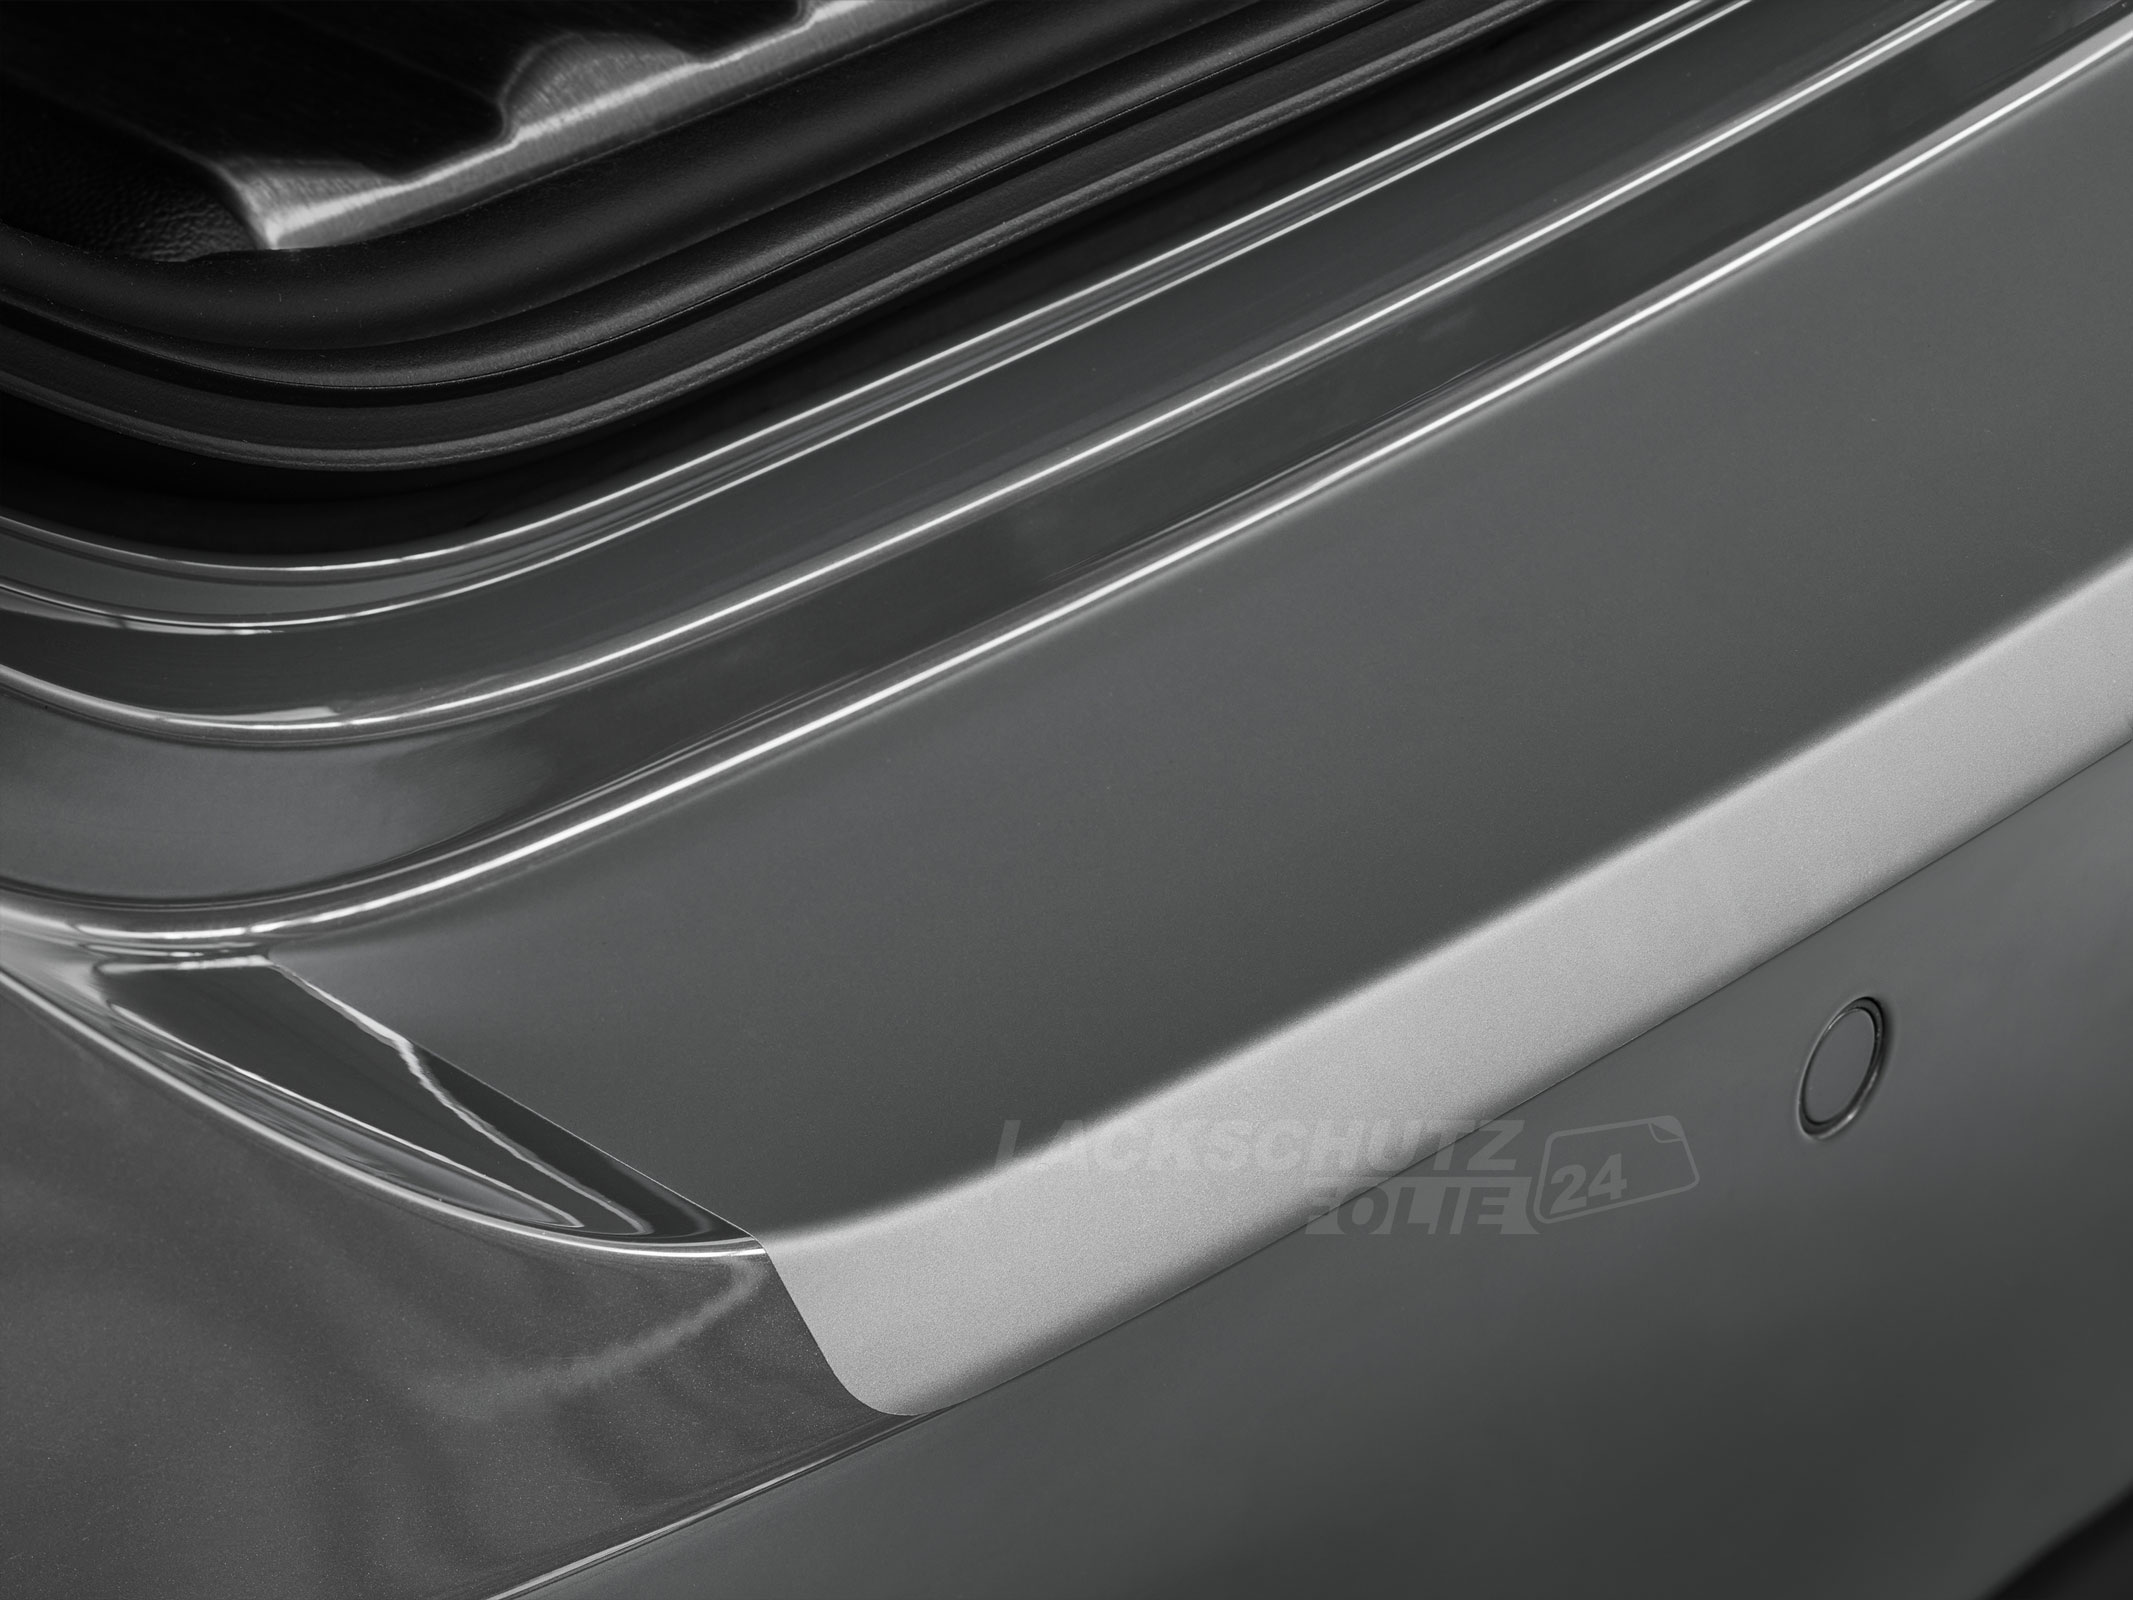 Ladekantenschutzfolie - Transparent Glatt MATT 110 µm stark  für Skoda Karoq Sportsline, Facelift, ab BJ 11/2021